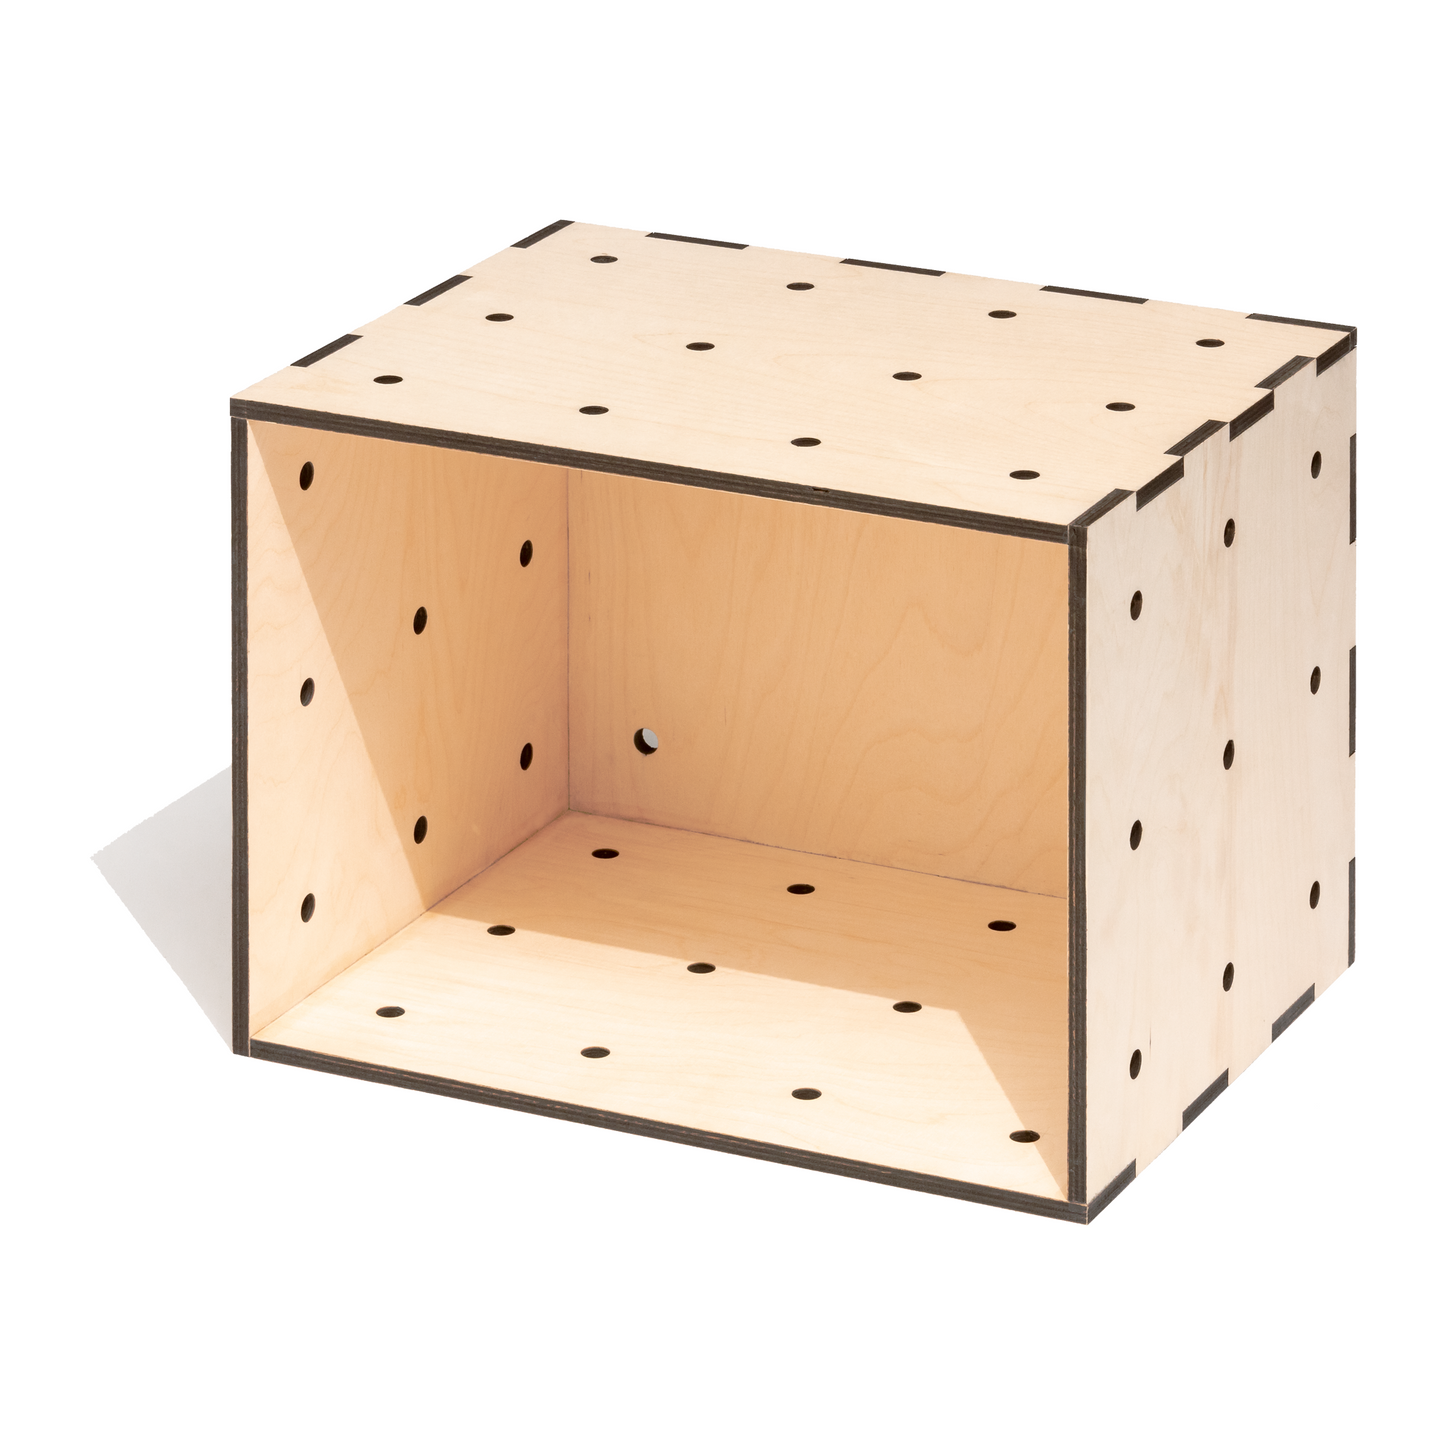  Kiste aus Holz für Stapelregal